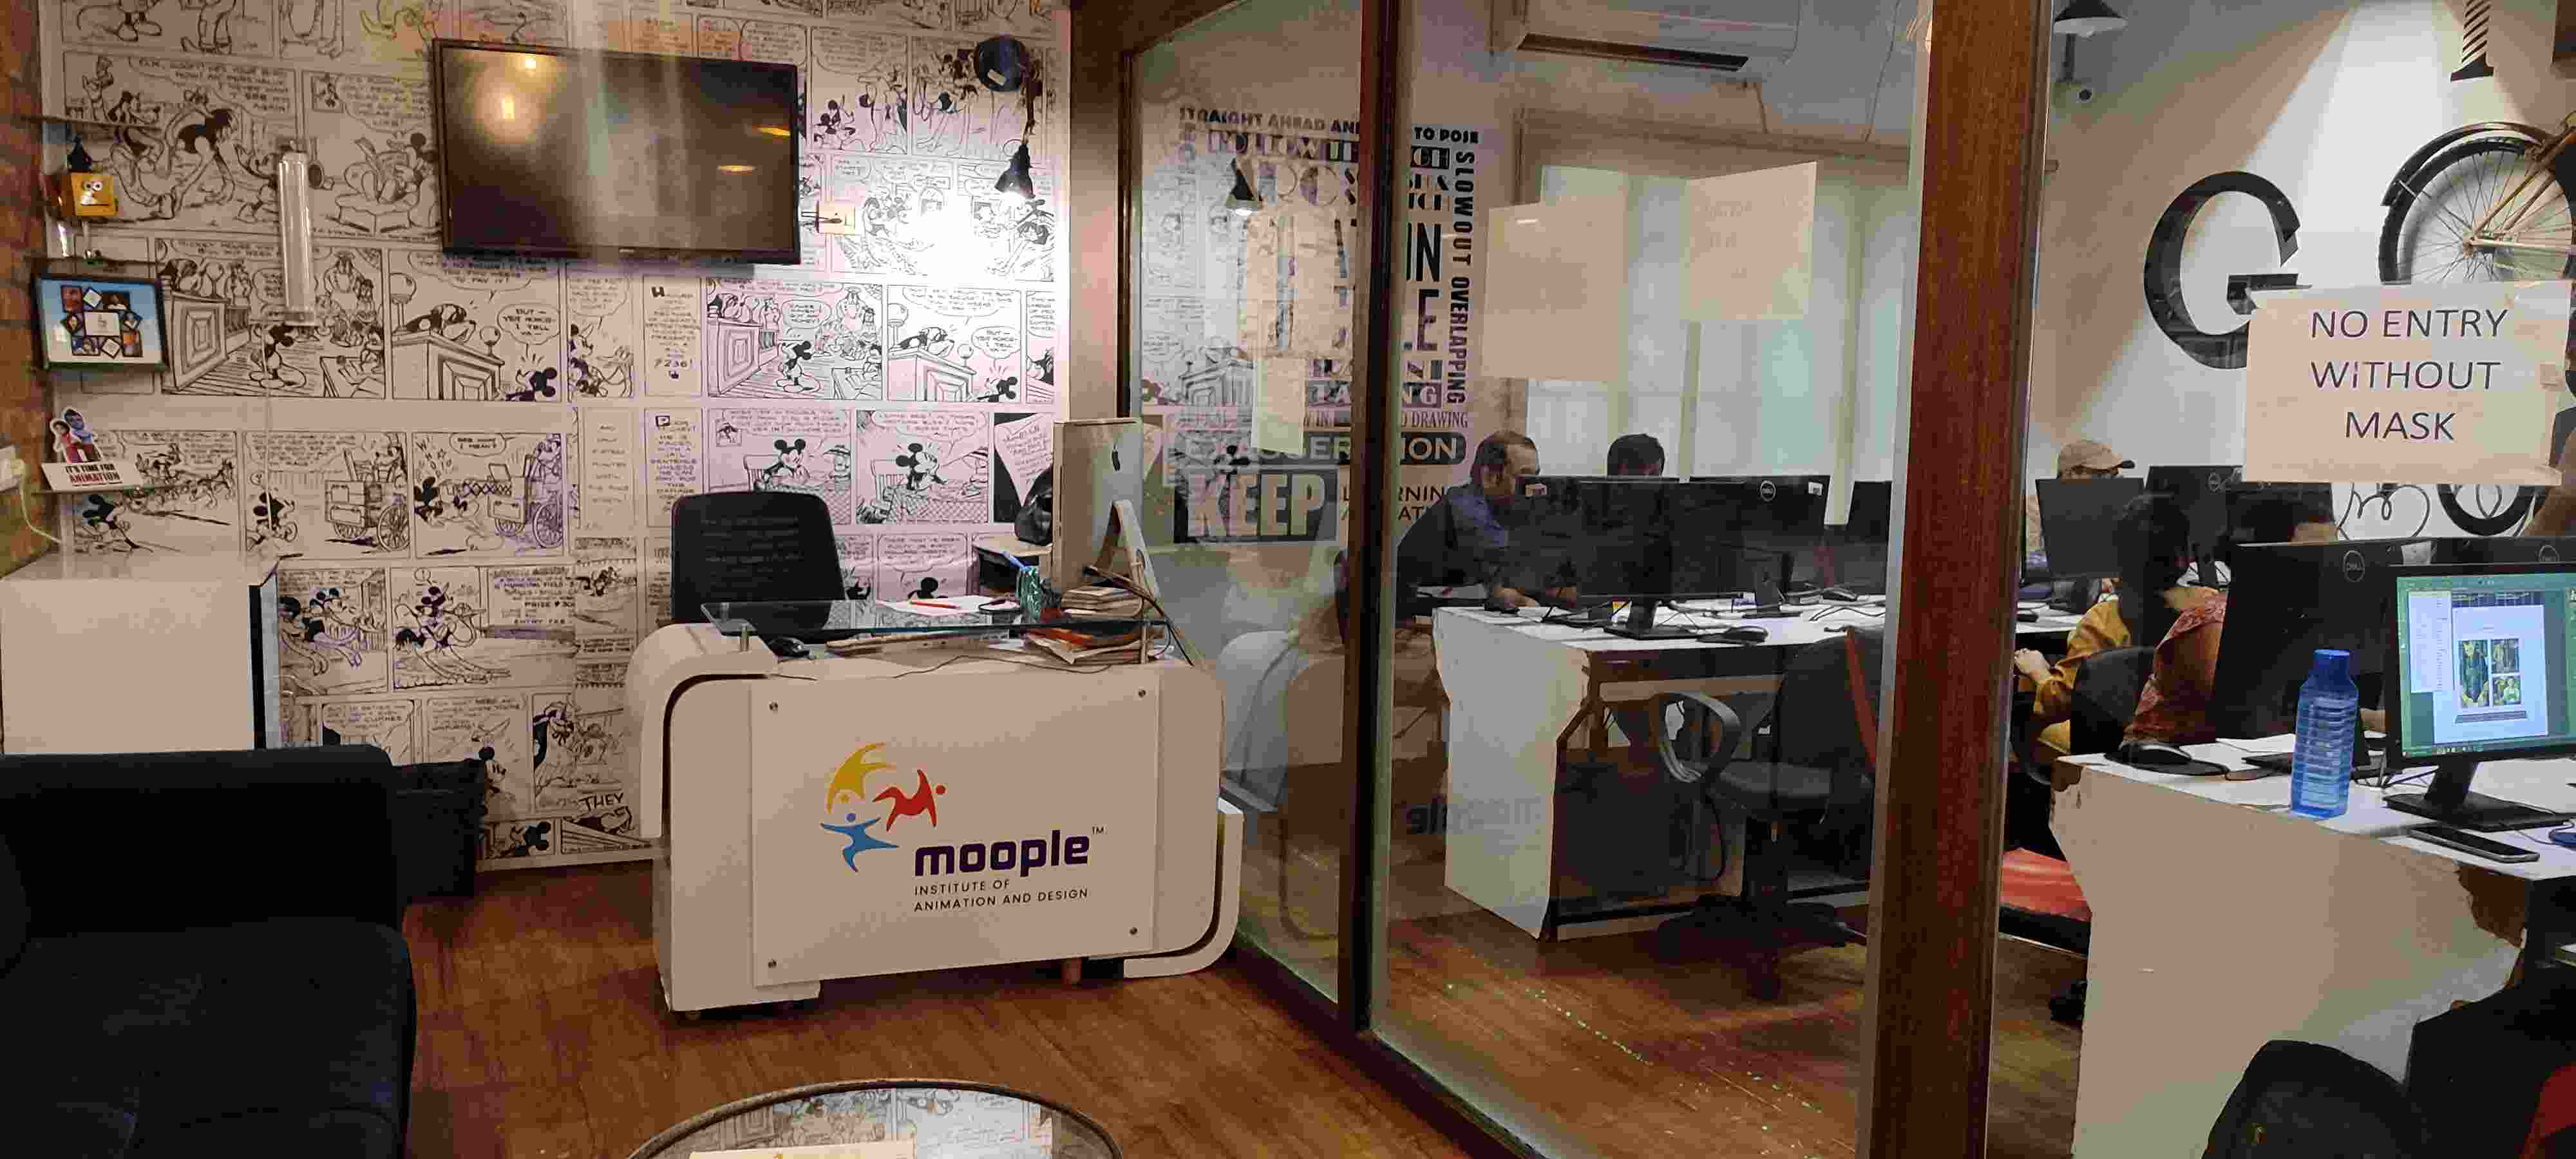 Moople Institute of Animation and Design in Jodhpurpark